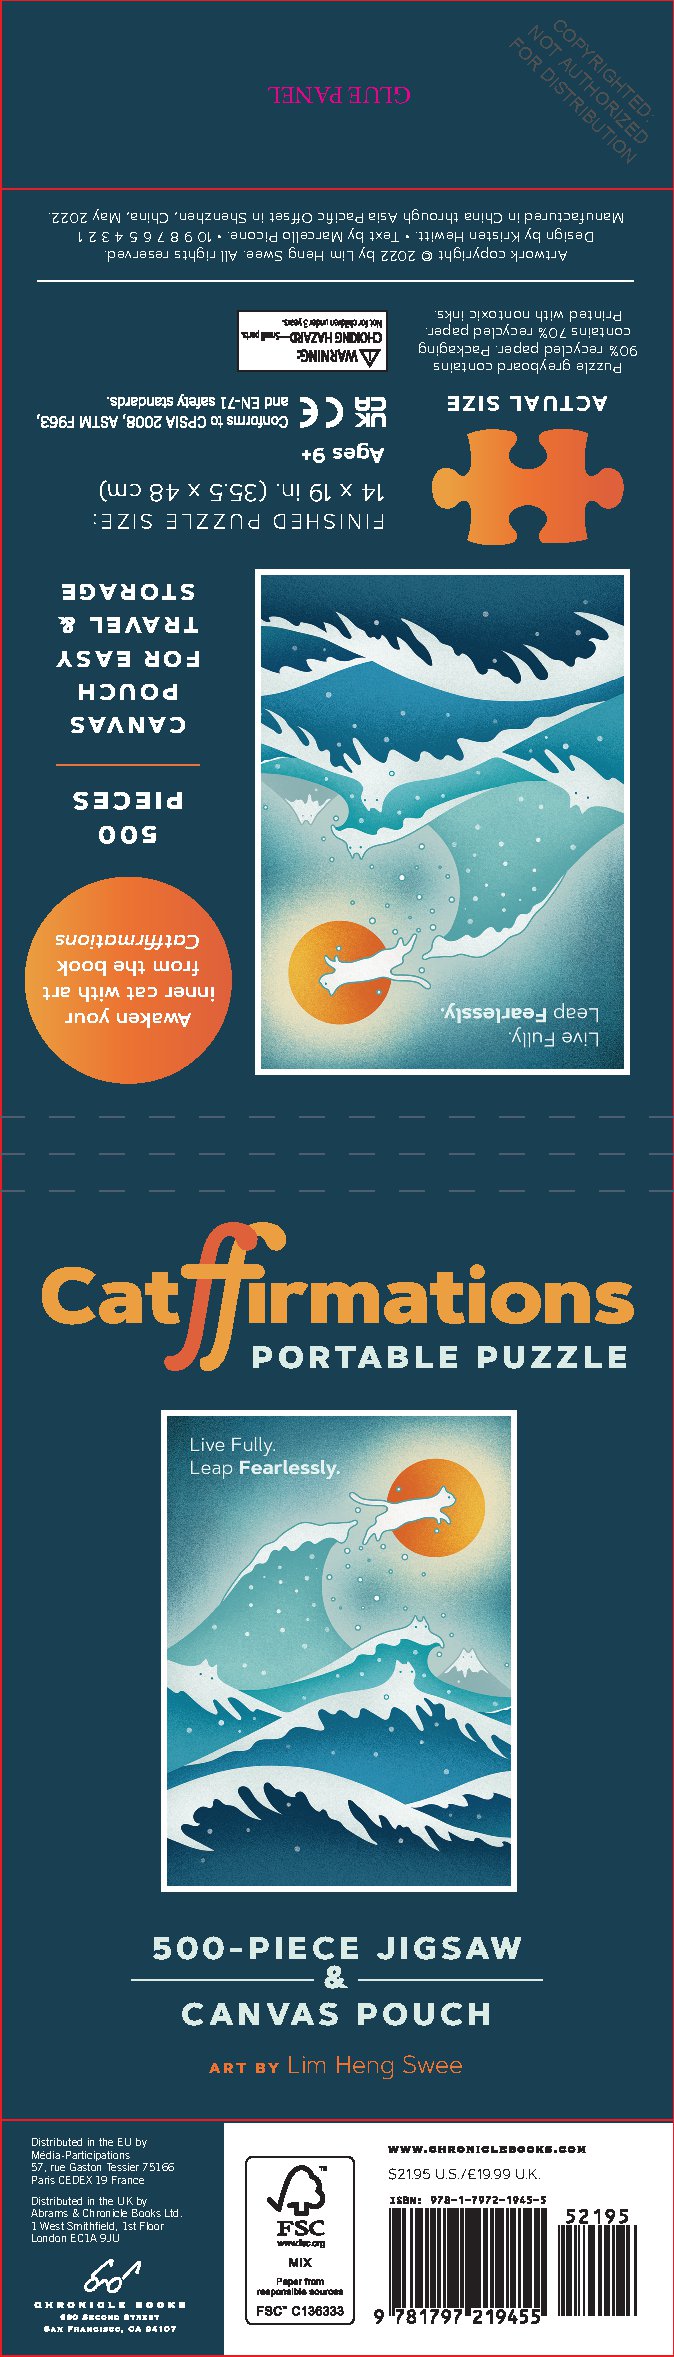 Catffirmations Portable Puzzle